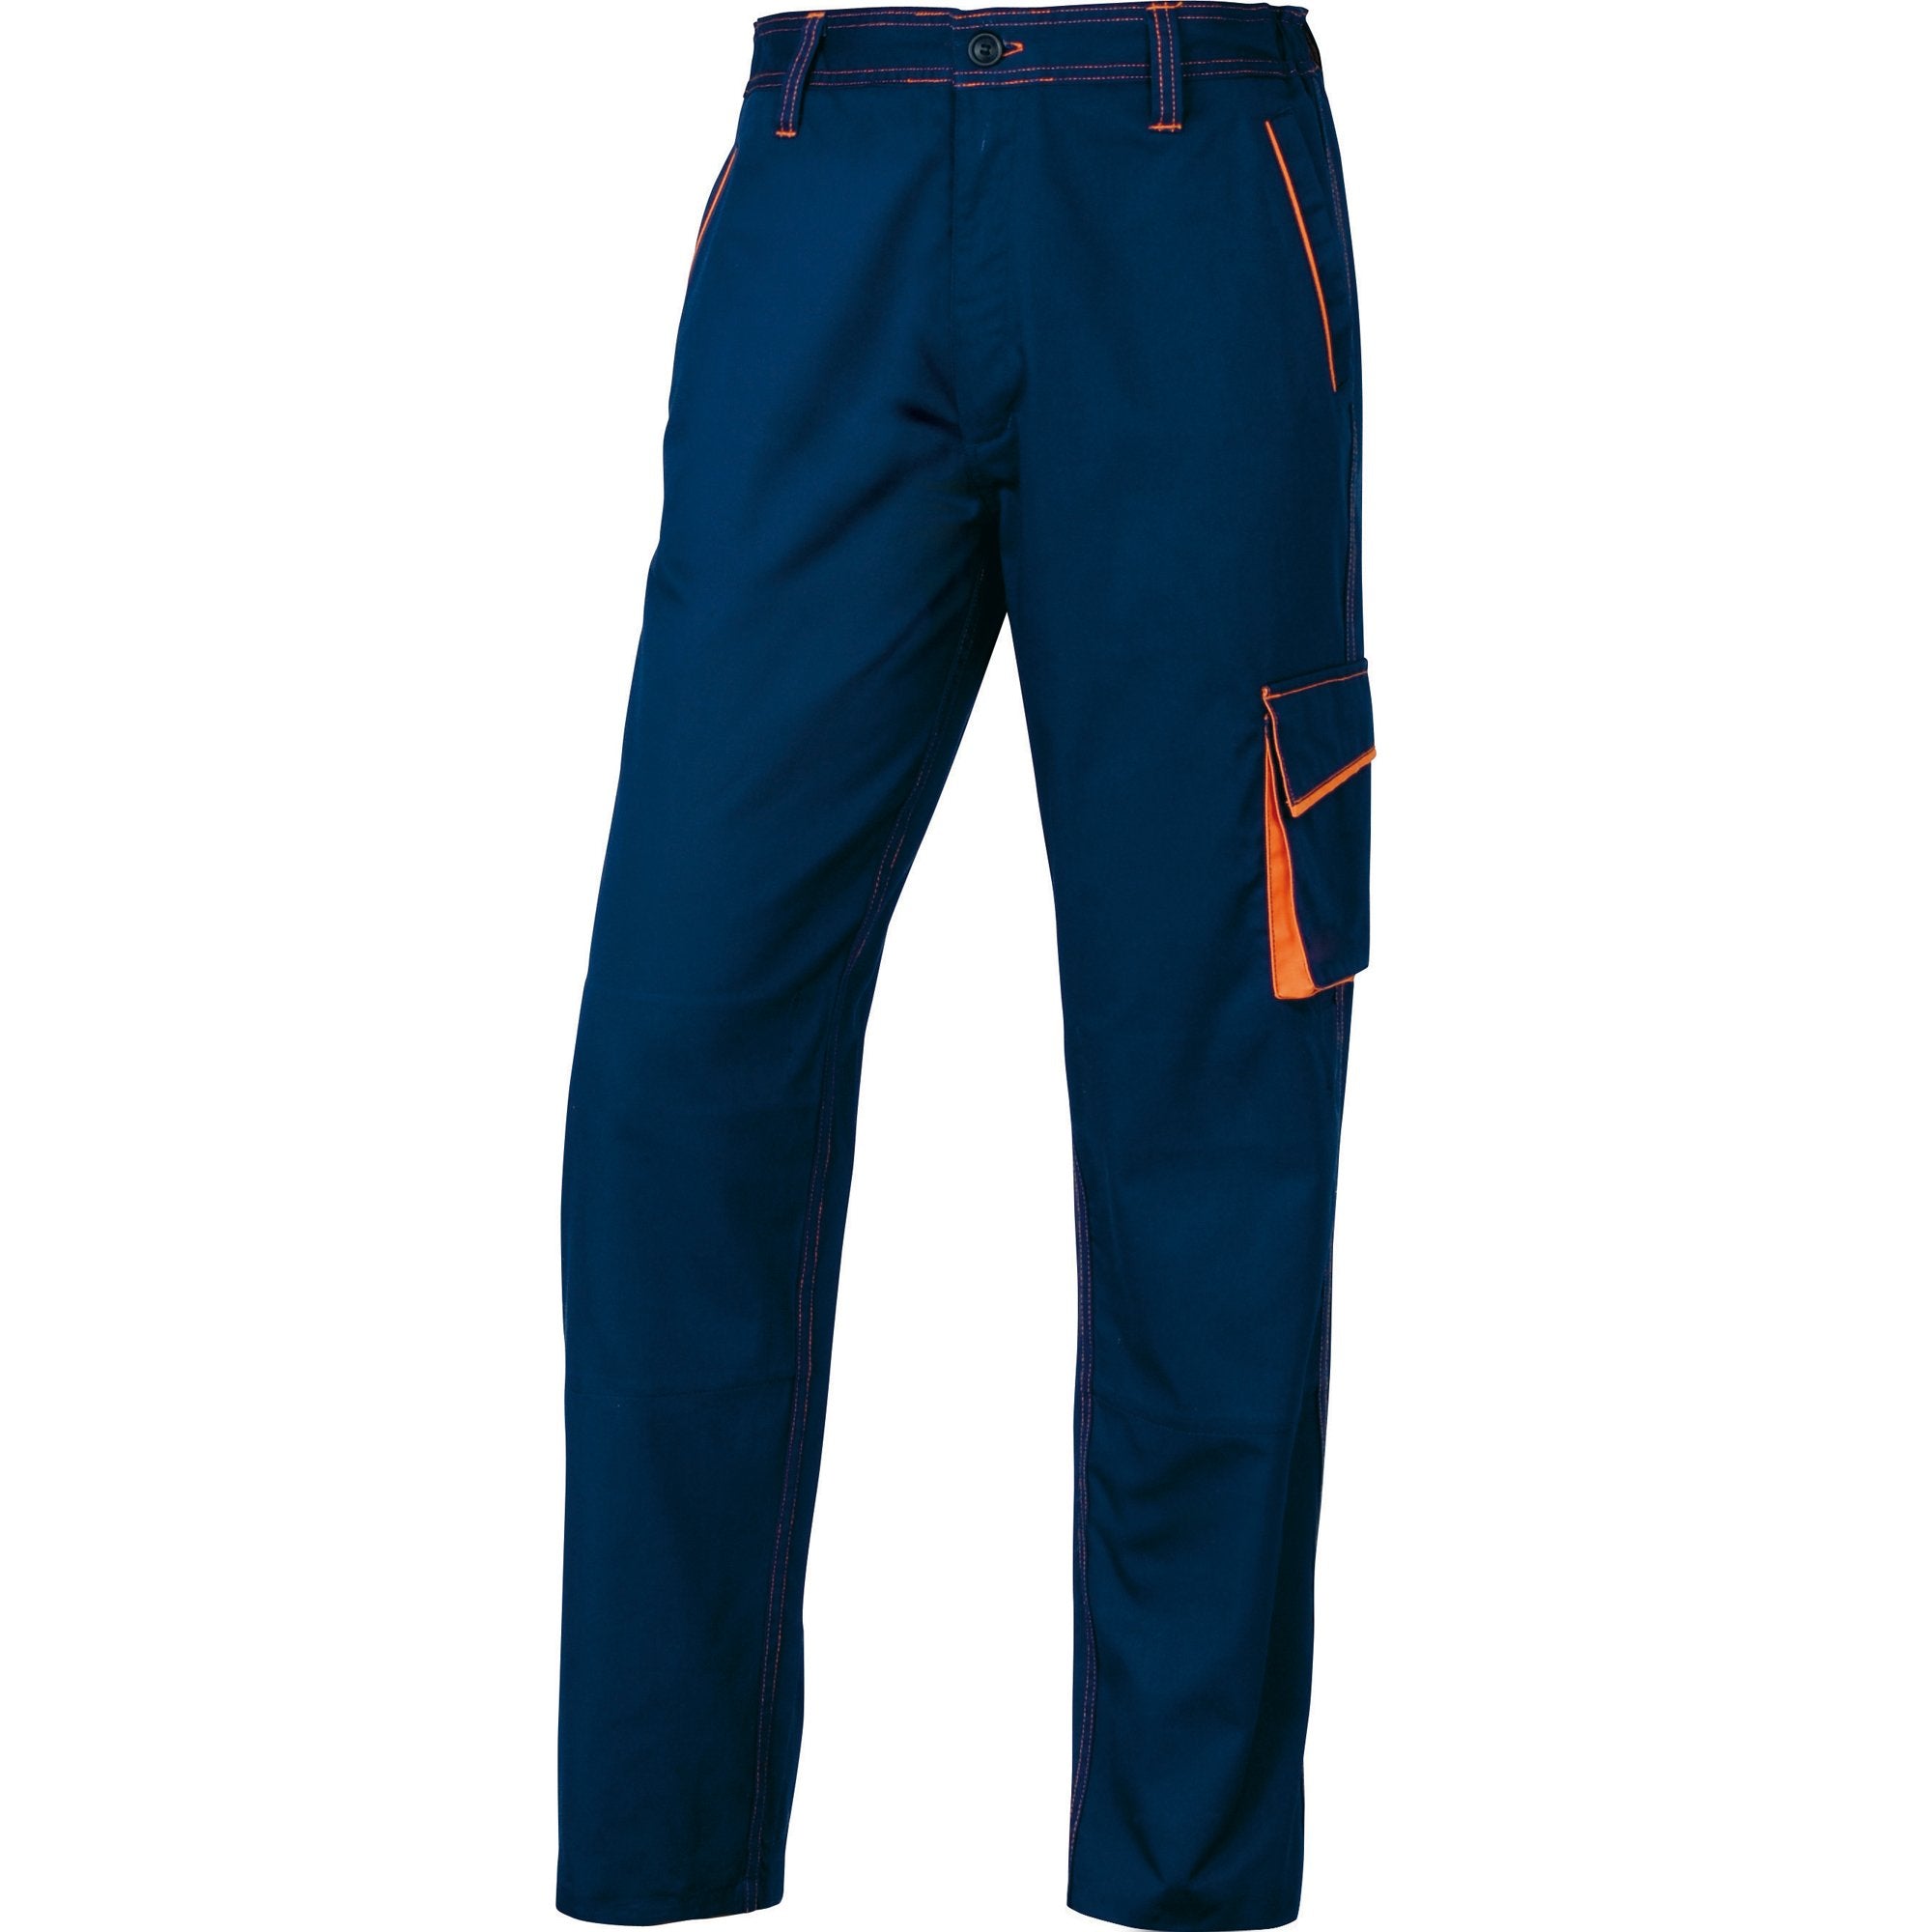 deltaplus-pantalone-lavoro-m6pan-blu-arancio-tg-xl-panostyle